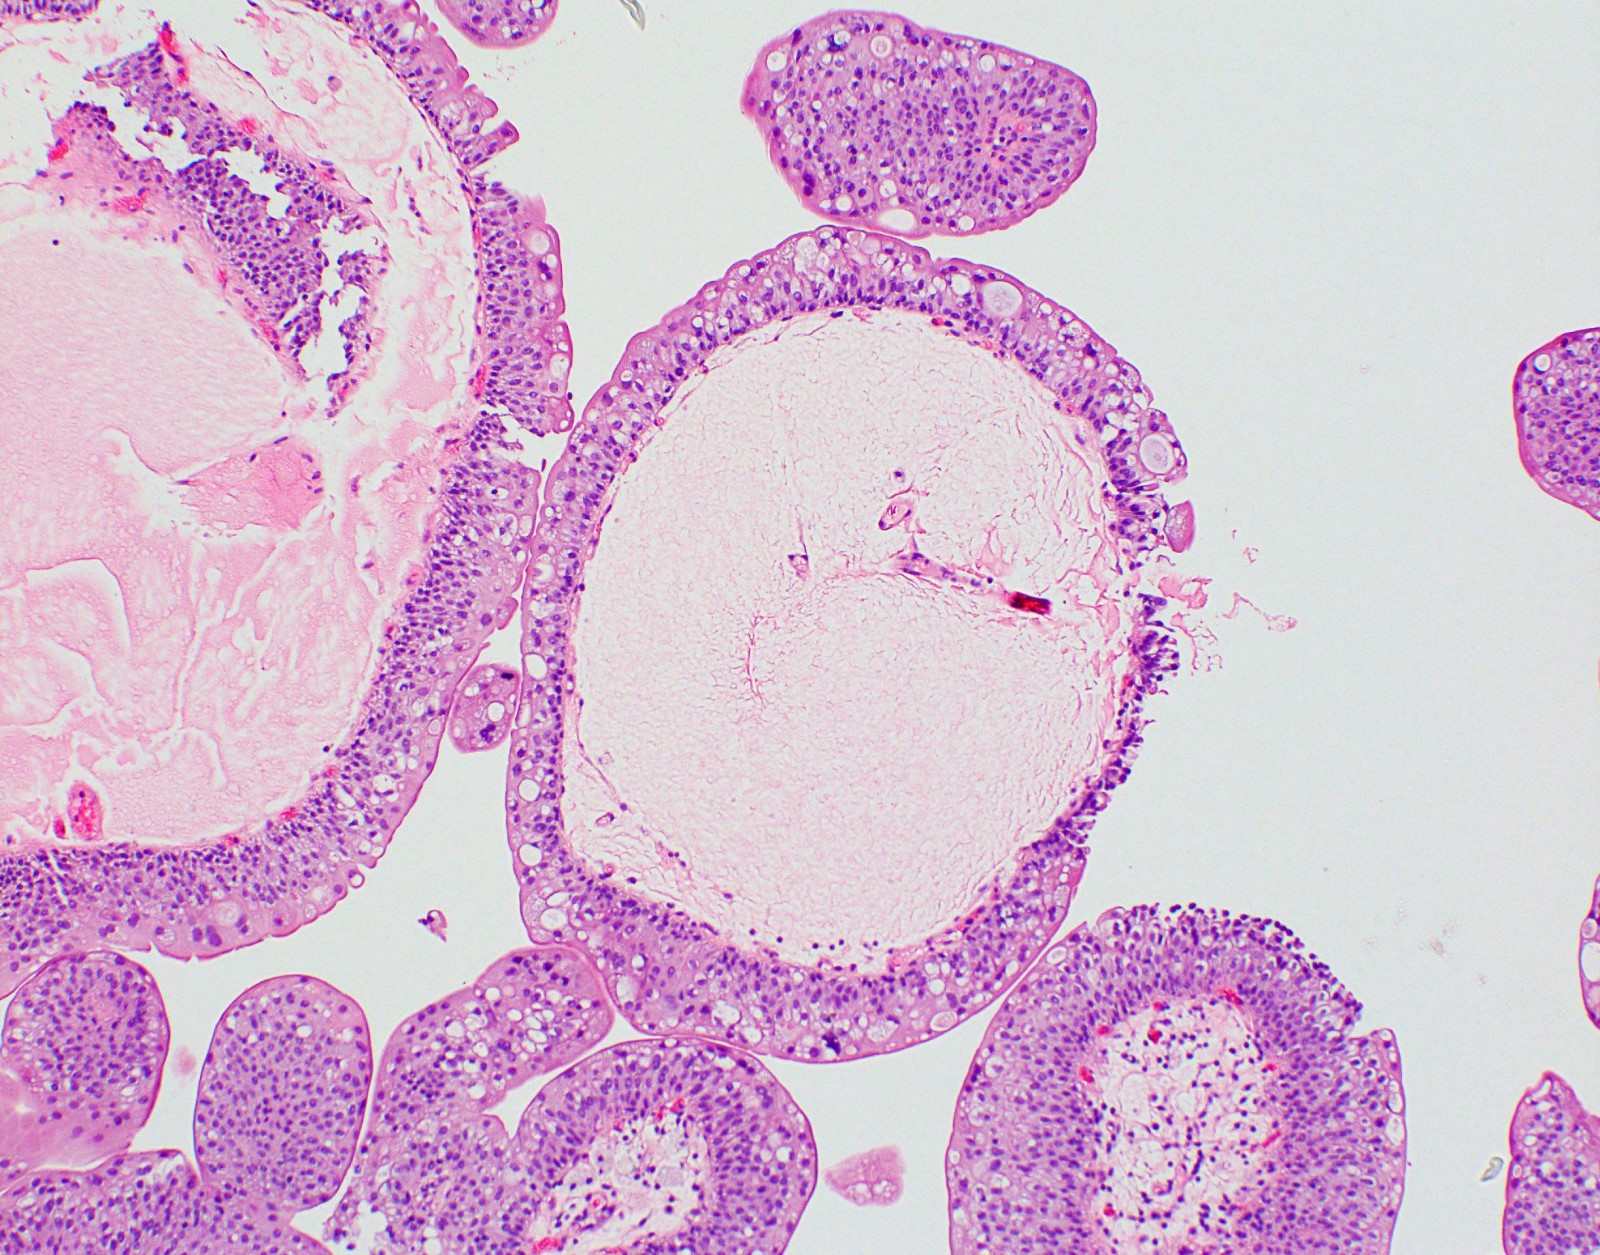 Papilloma bladder pathology outlines